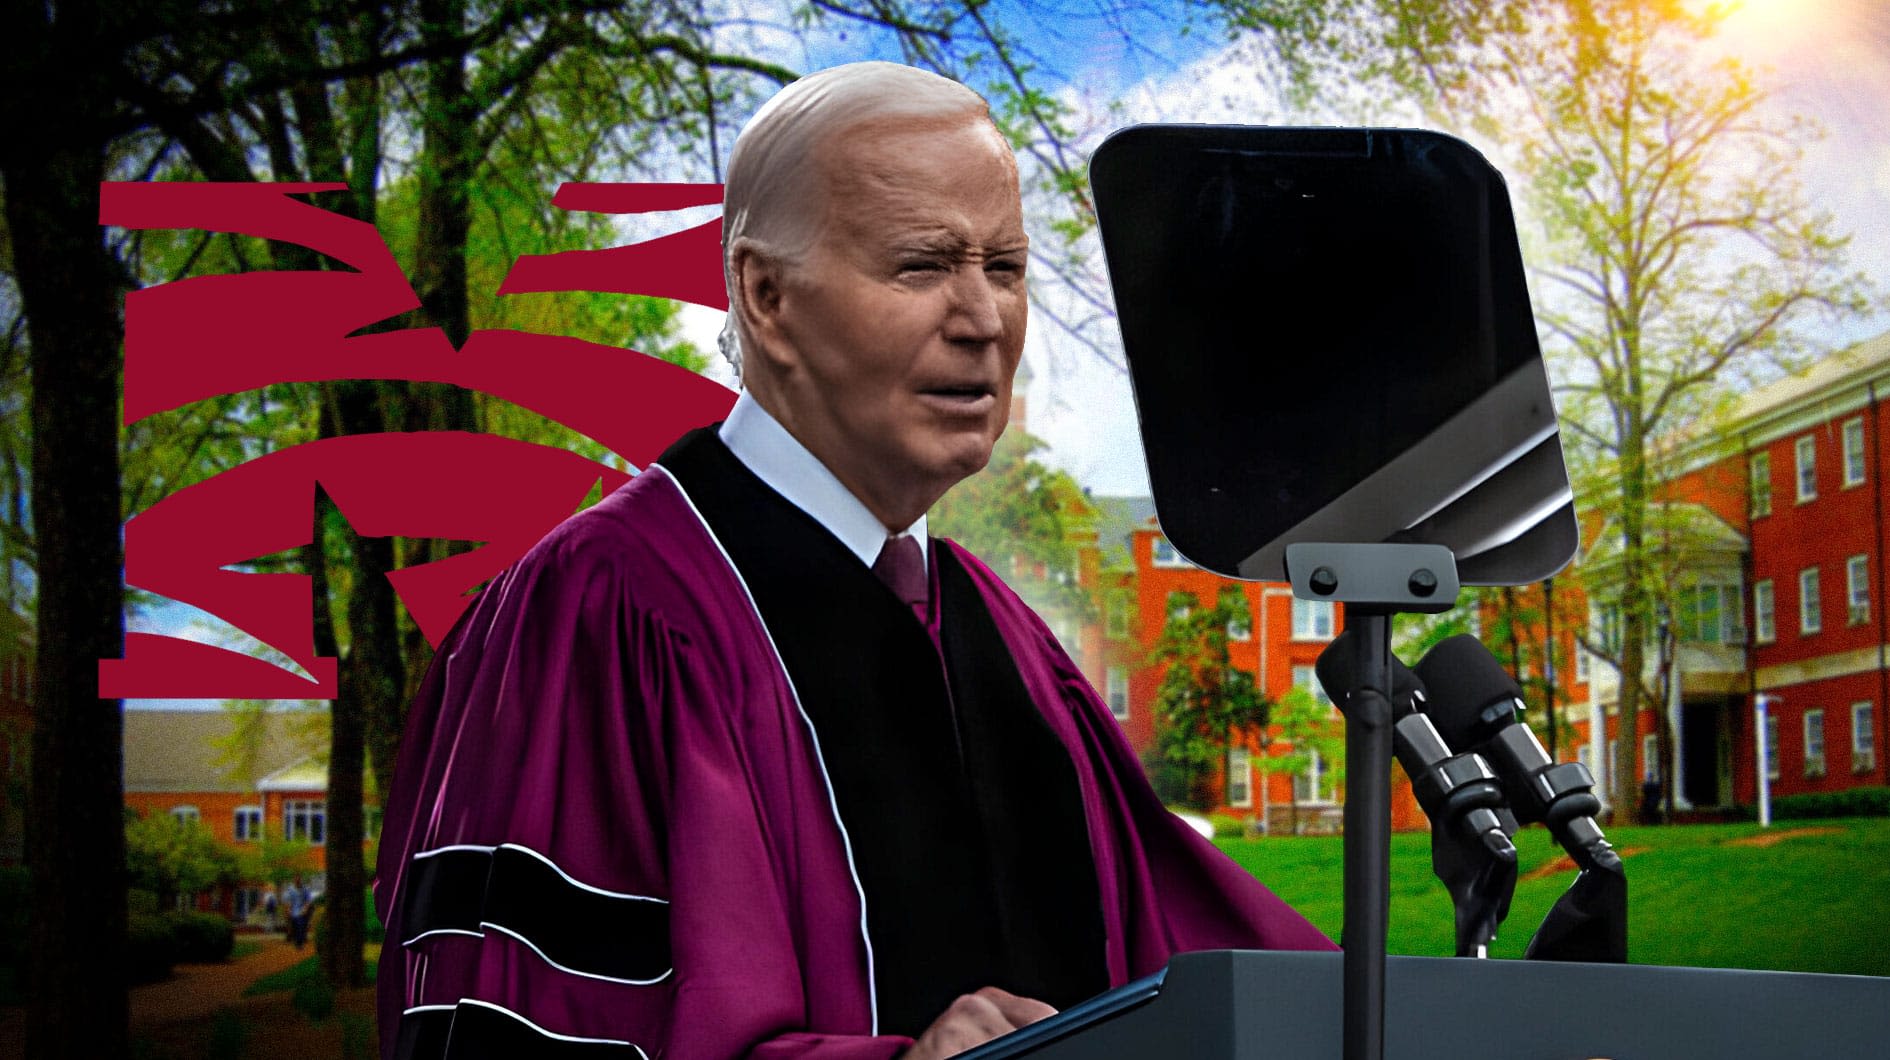 Morehouse College releases statement after President Joe Biden commencement speech